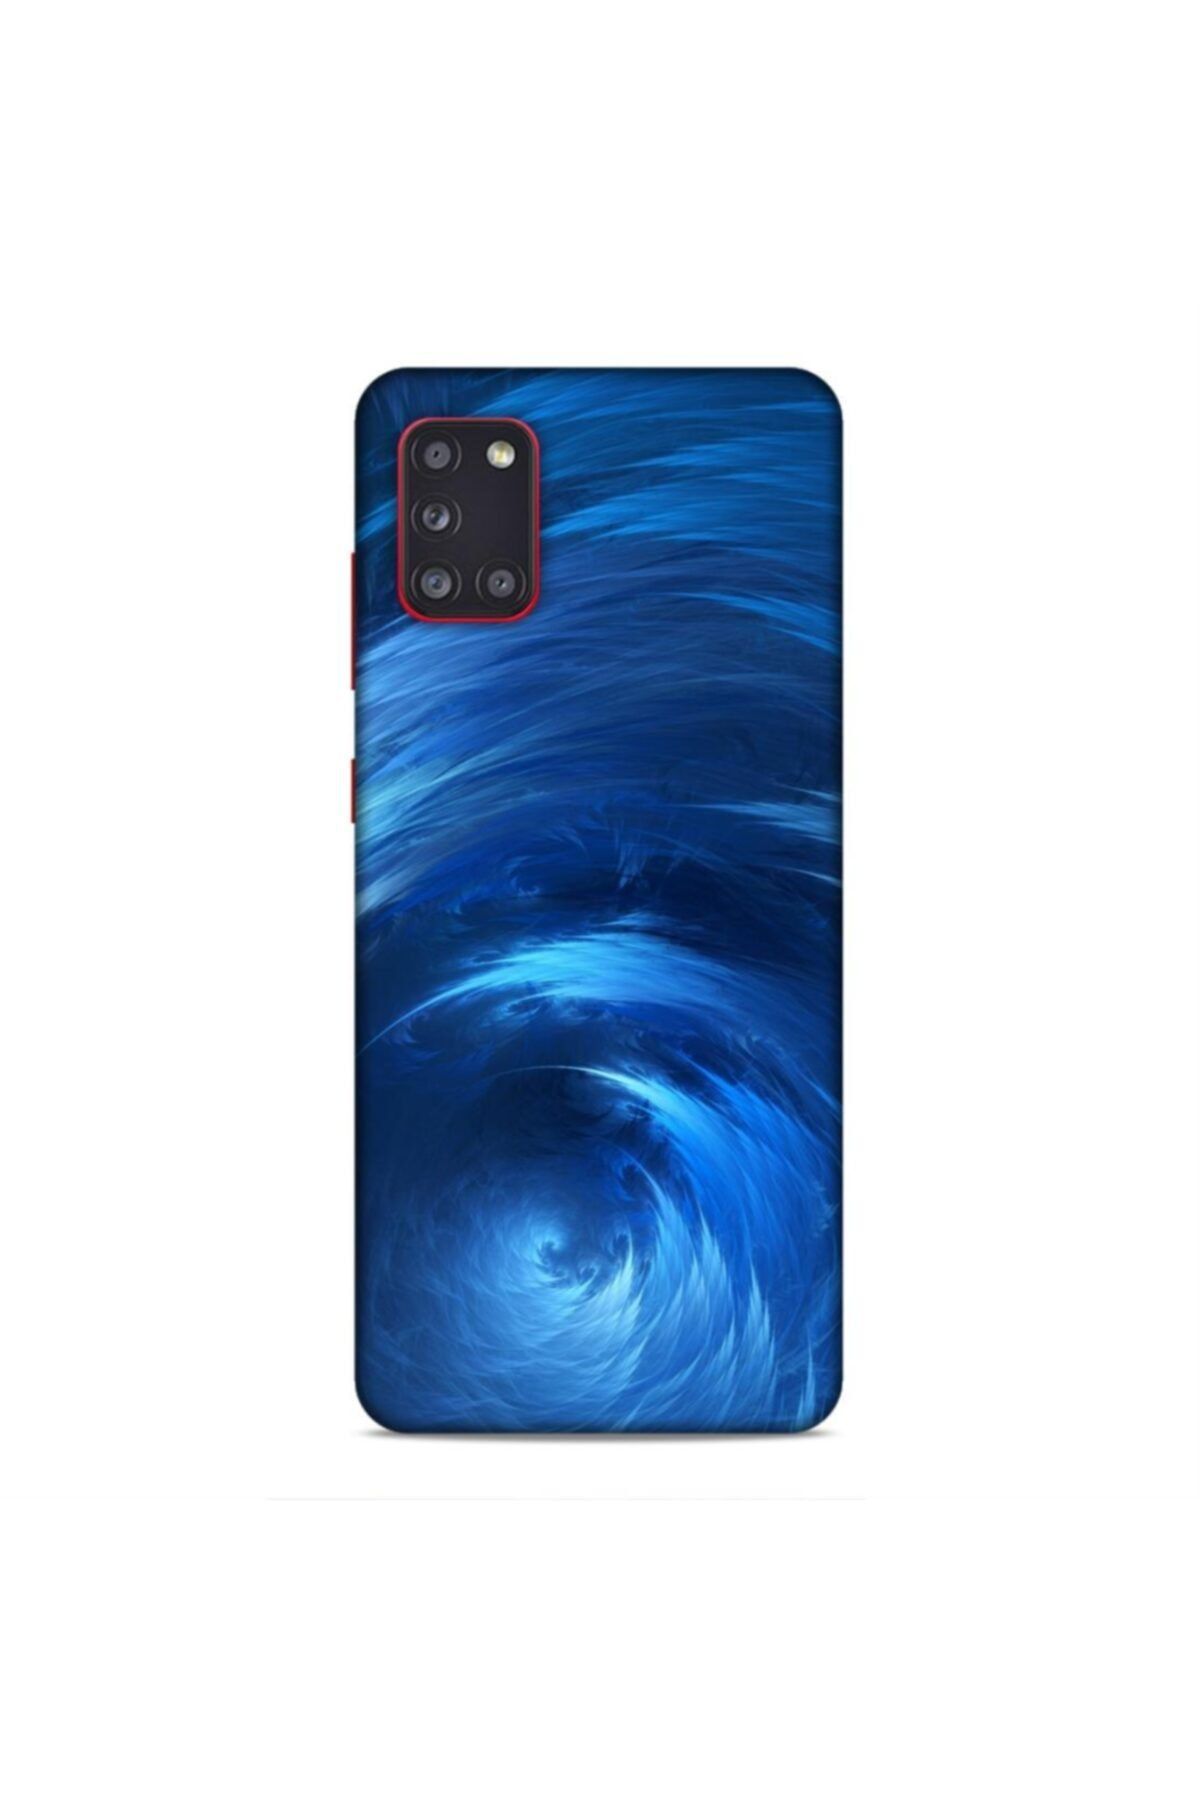 Pickcase Samsung Galaxy A31 Kılıf Desenli Arka Kapak Mavi Dalga